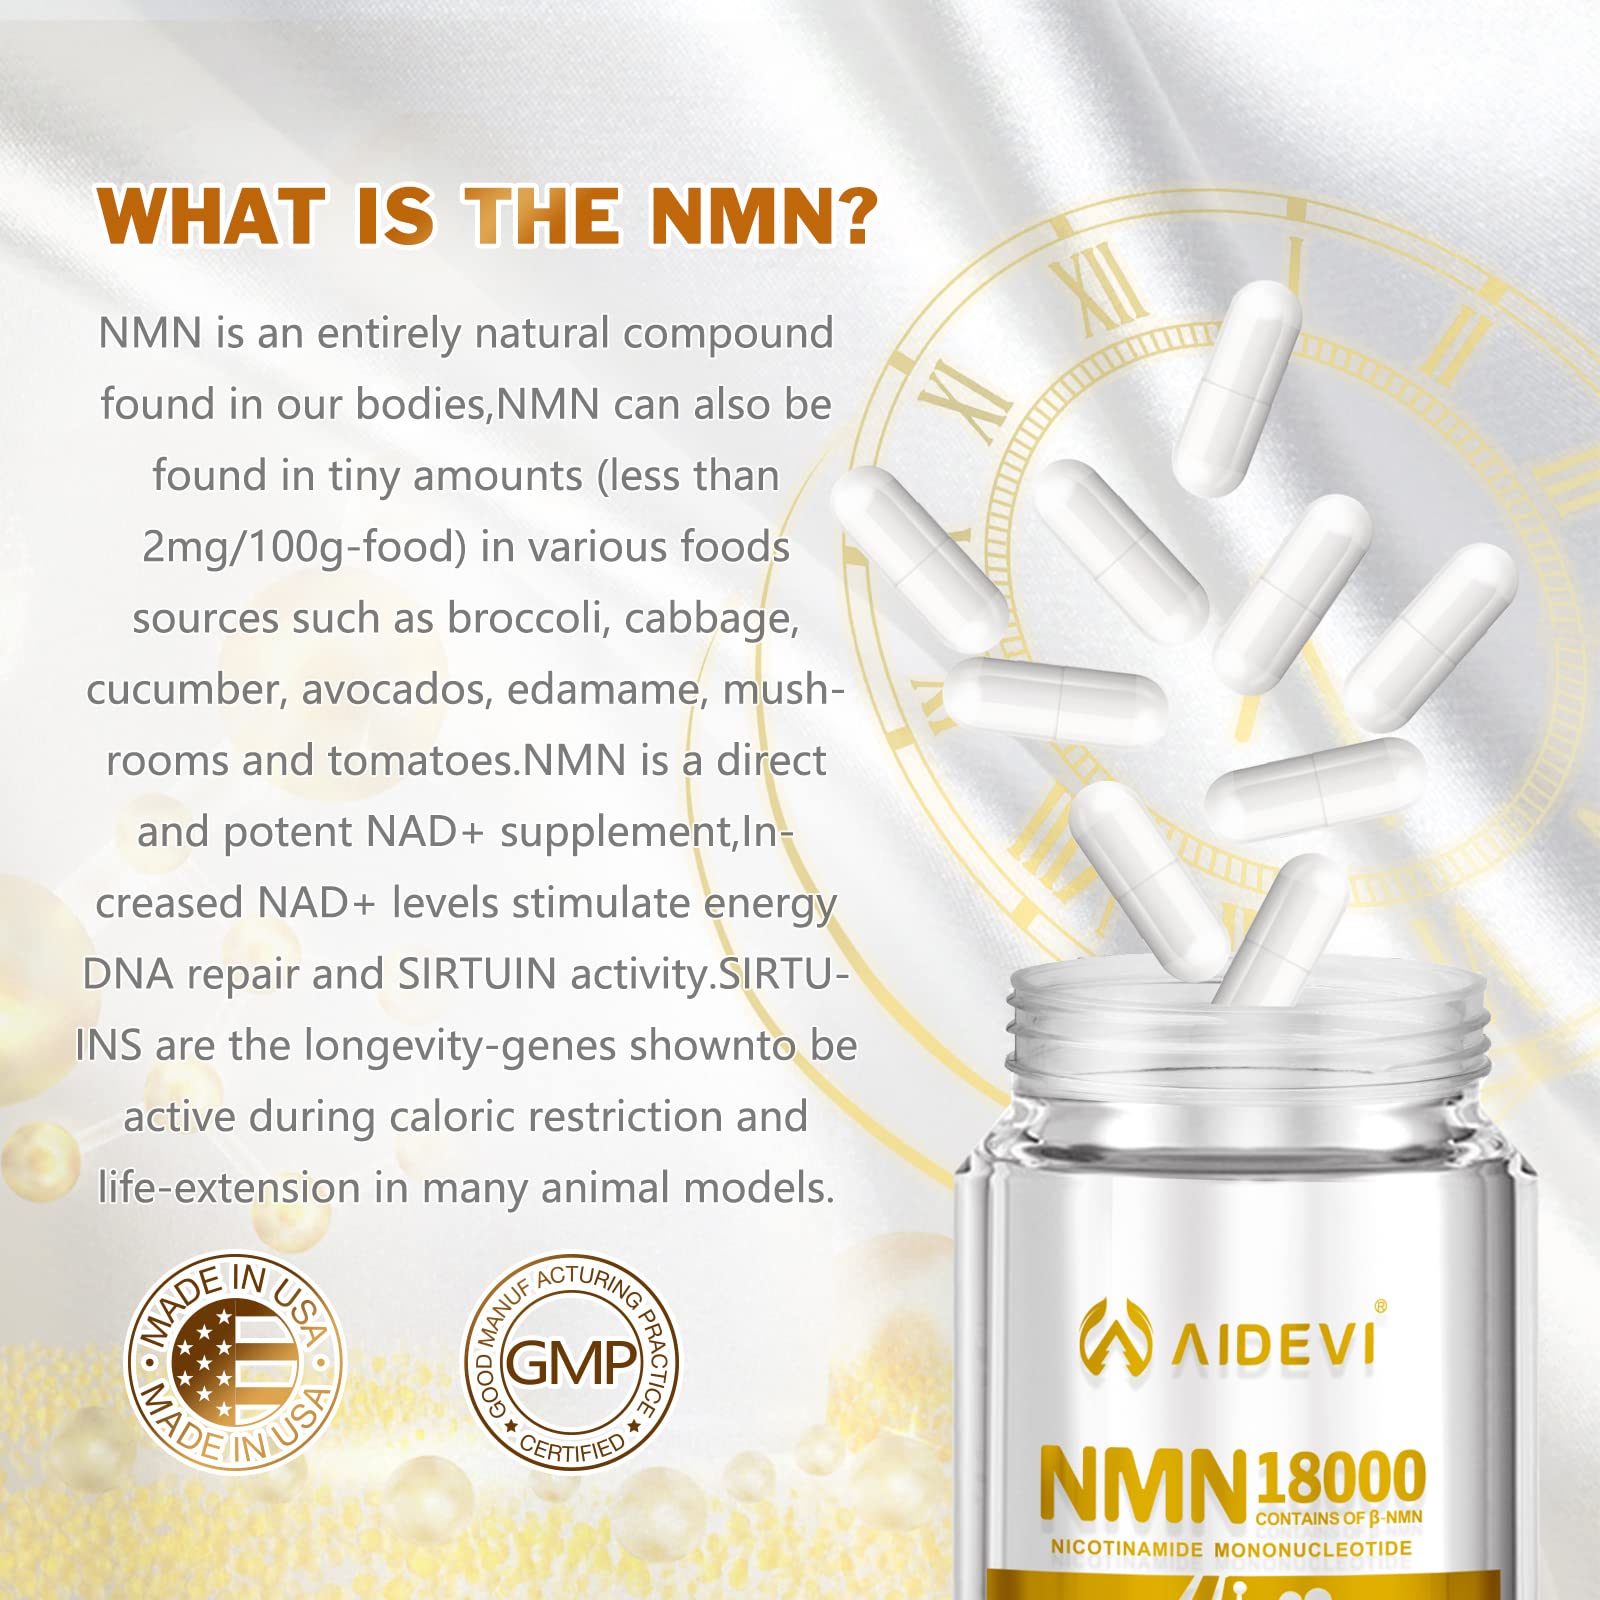 AIDEVI NMN 18000 - NMN Nicotinamide Mononucleotide Supplement with